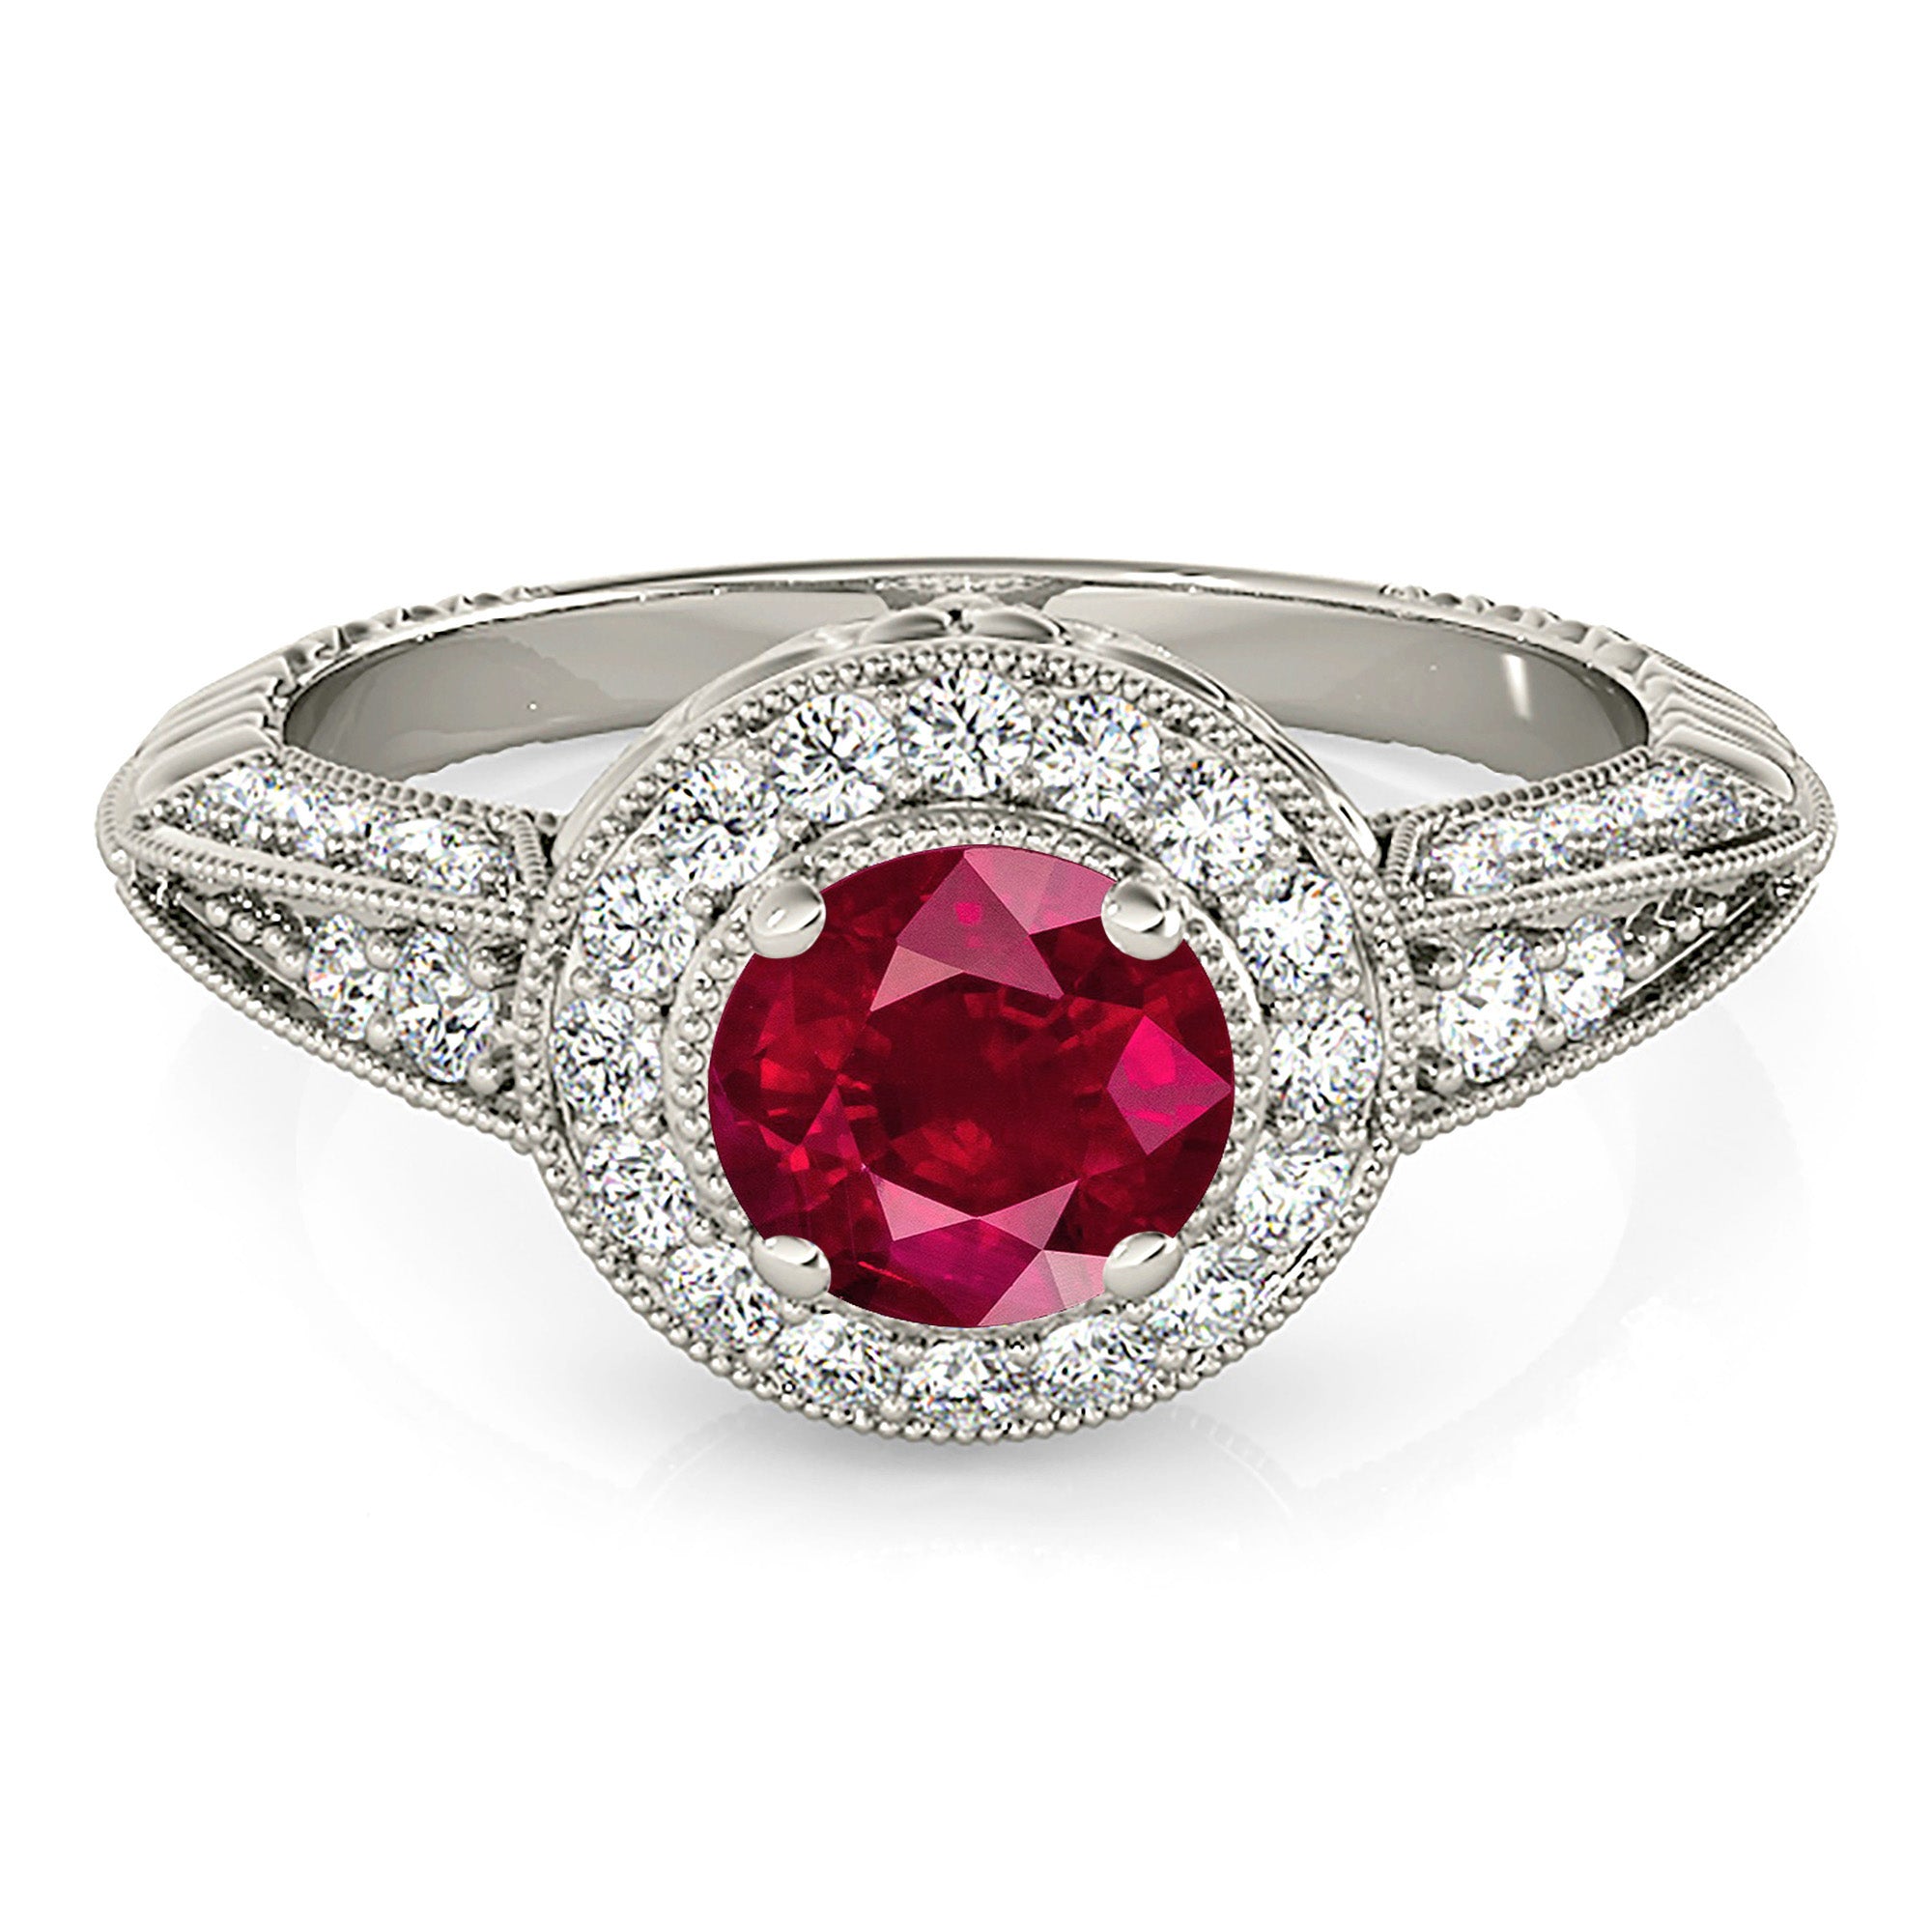 2.35 ct. Genuine Ruby Ring With 0.40 ctw. Diamond Milgrain Halo And Filigree Design Diamond band-in 14K/18K White, Yellow, Rose Gold and Platinum - Christmas Jewelry Gift -VIRABYANI